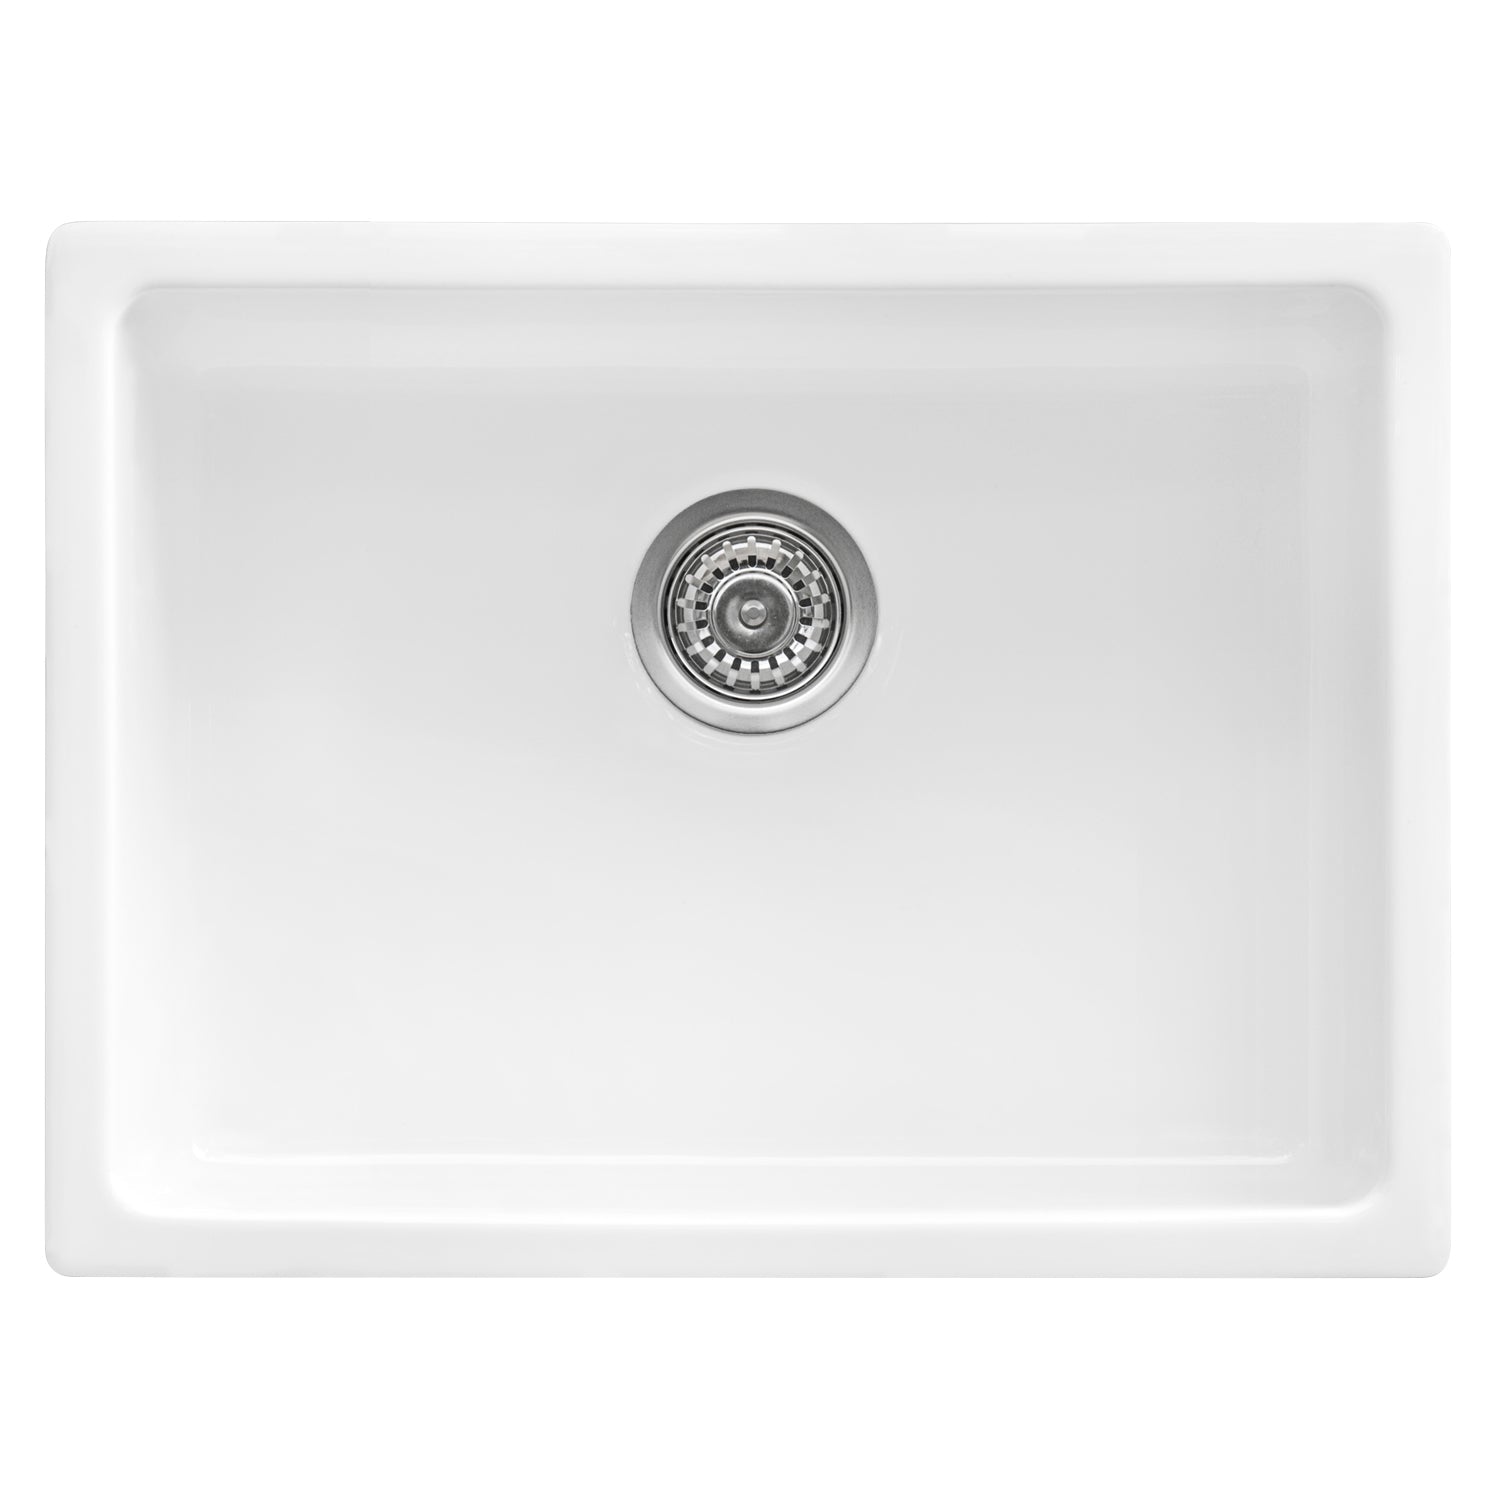 Fireclay Undermount / Drop-in Topmount Kitchen Sink Single Bowl - White